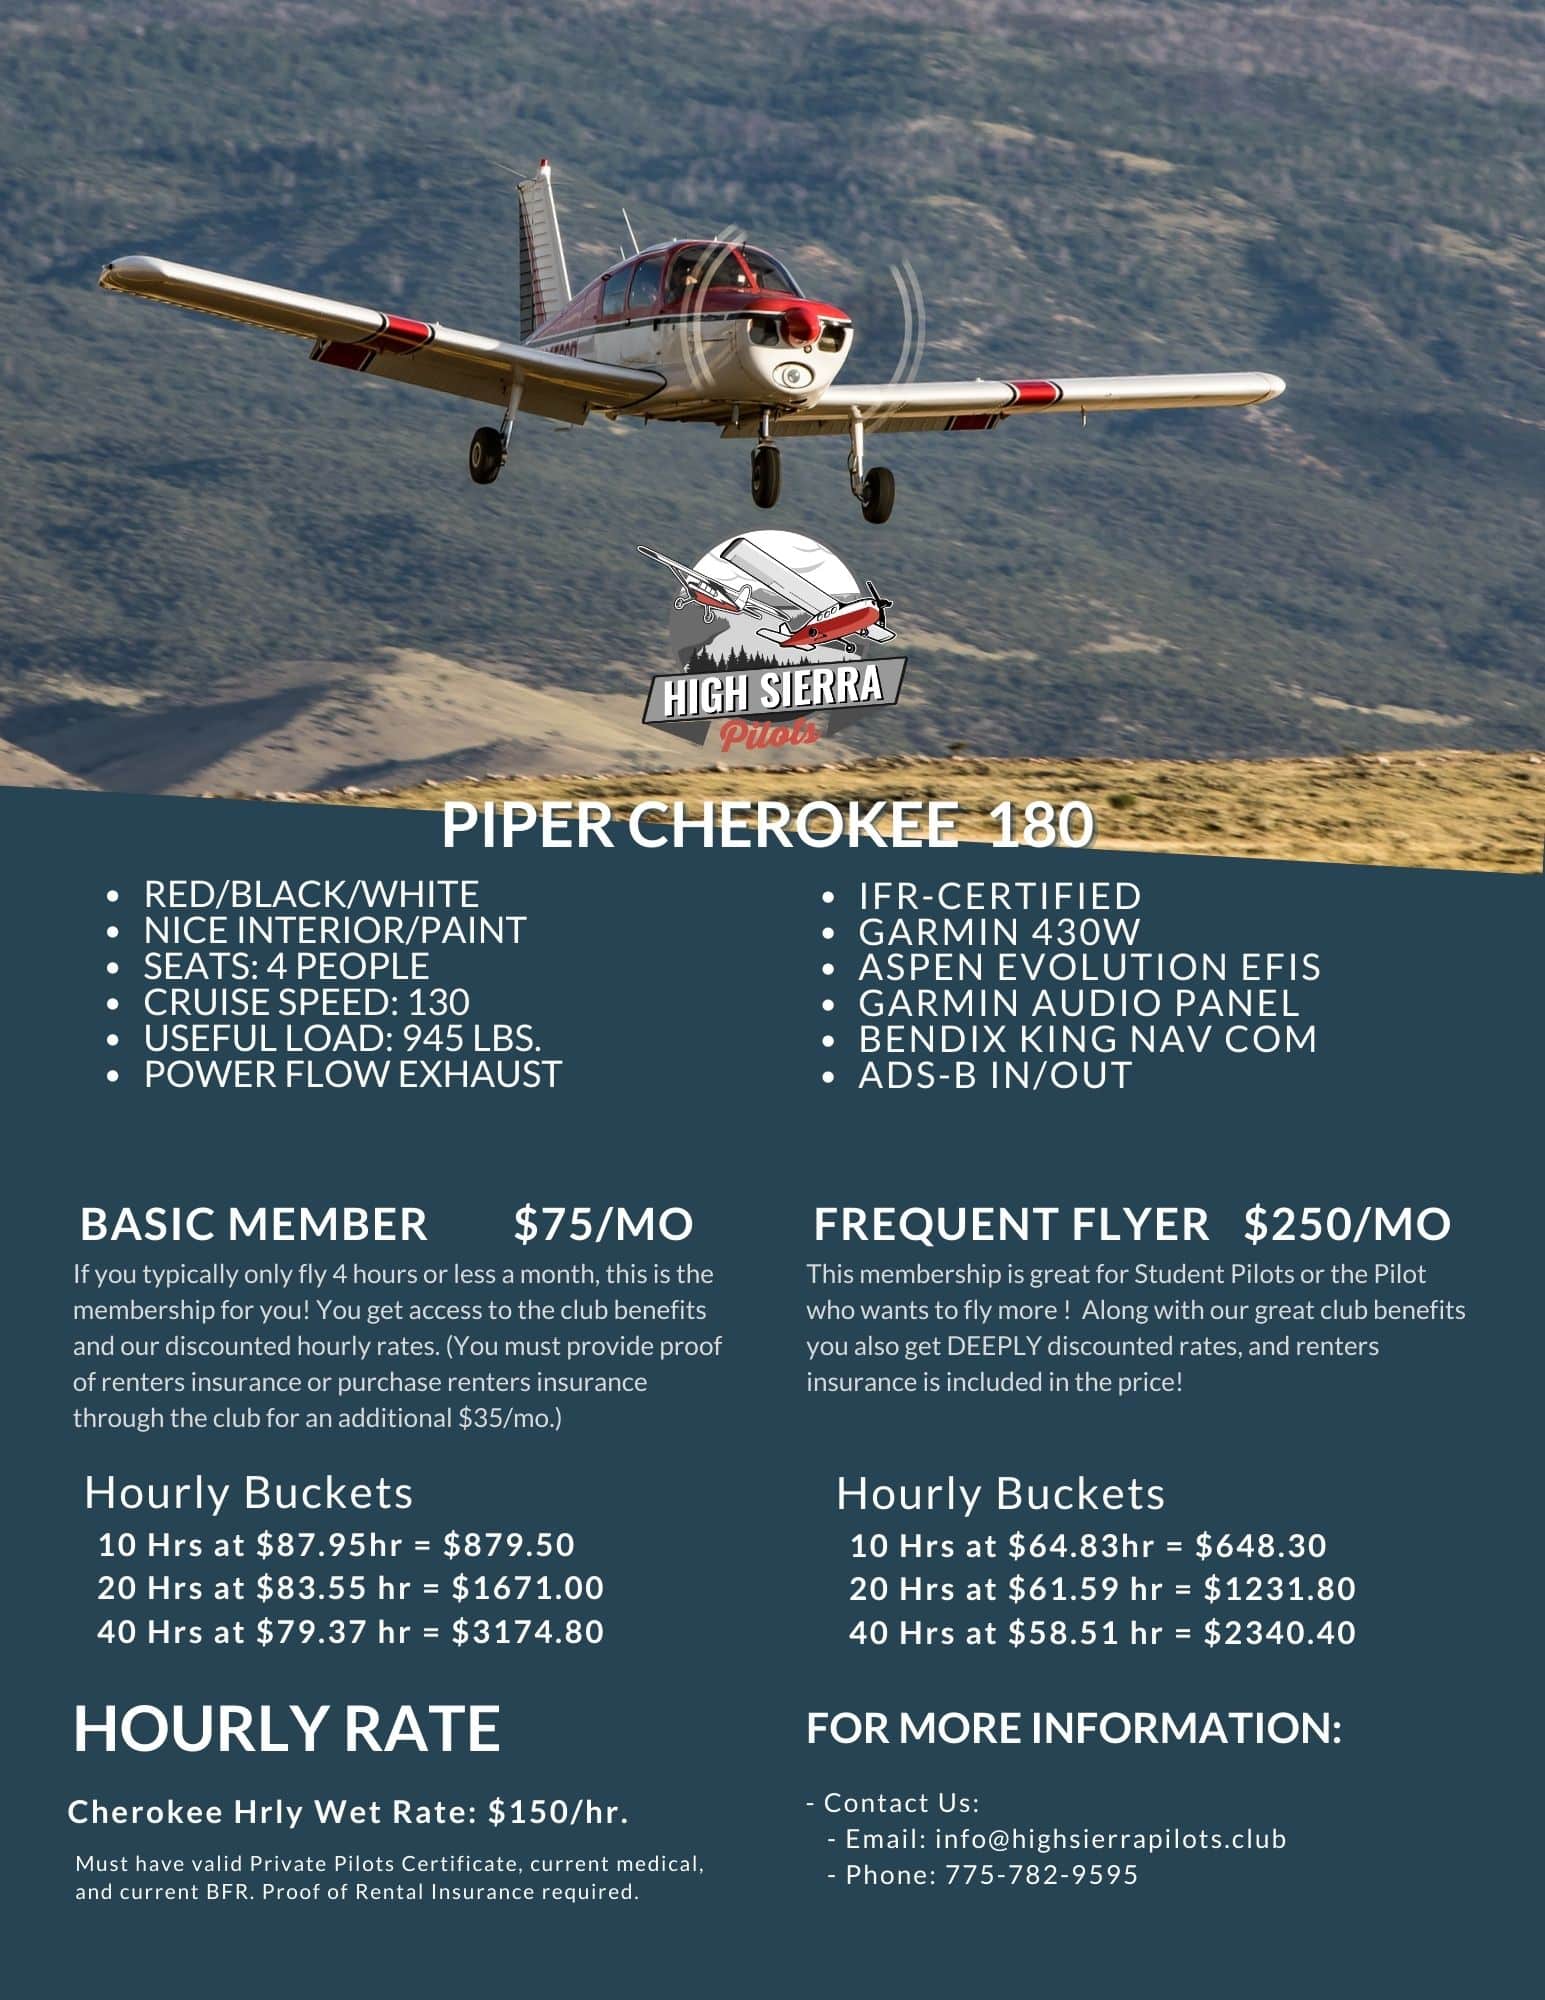 Pa 28 160 High Sierra Pilots